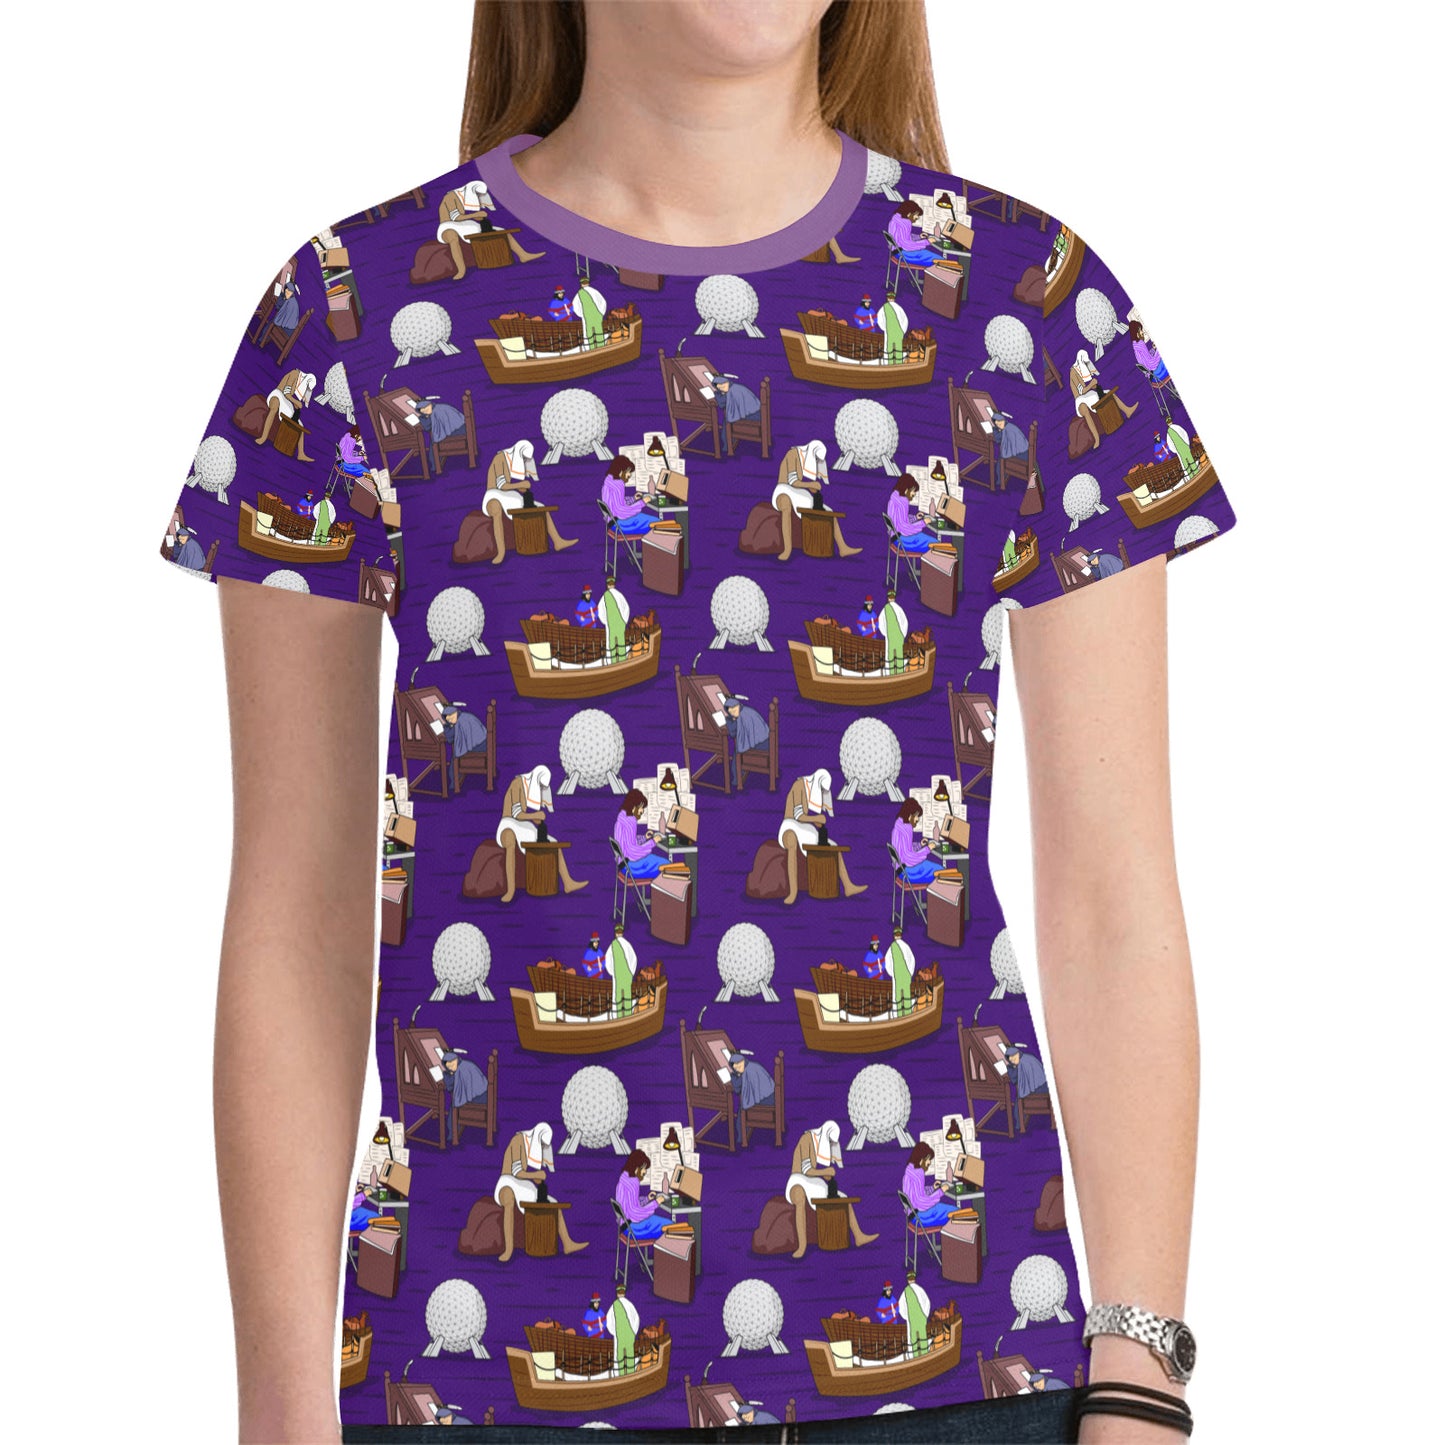 Spaceship Earth T-shirt for Women